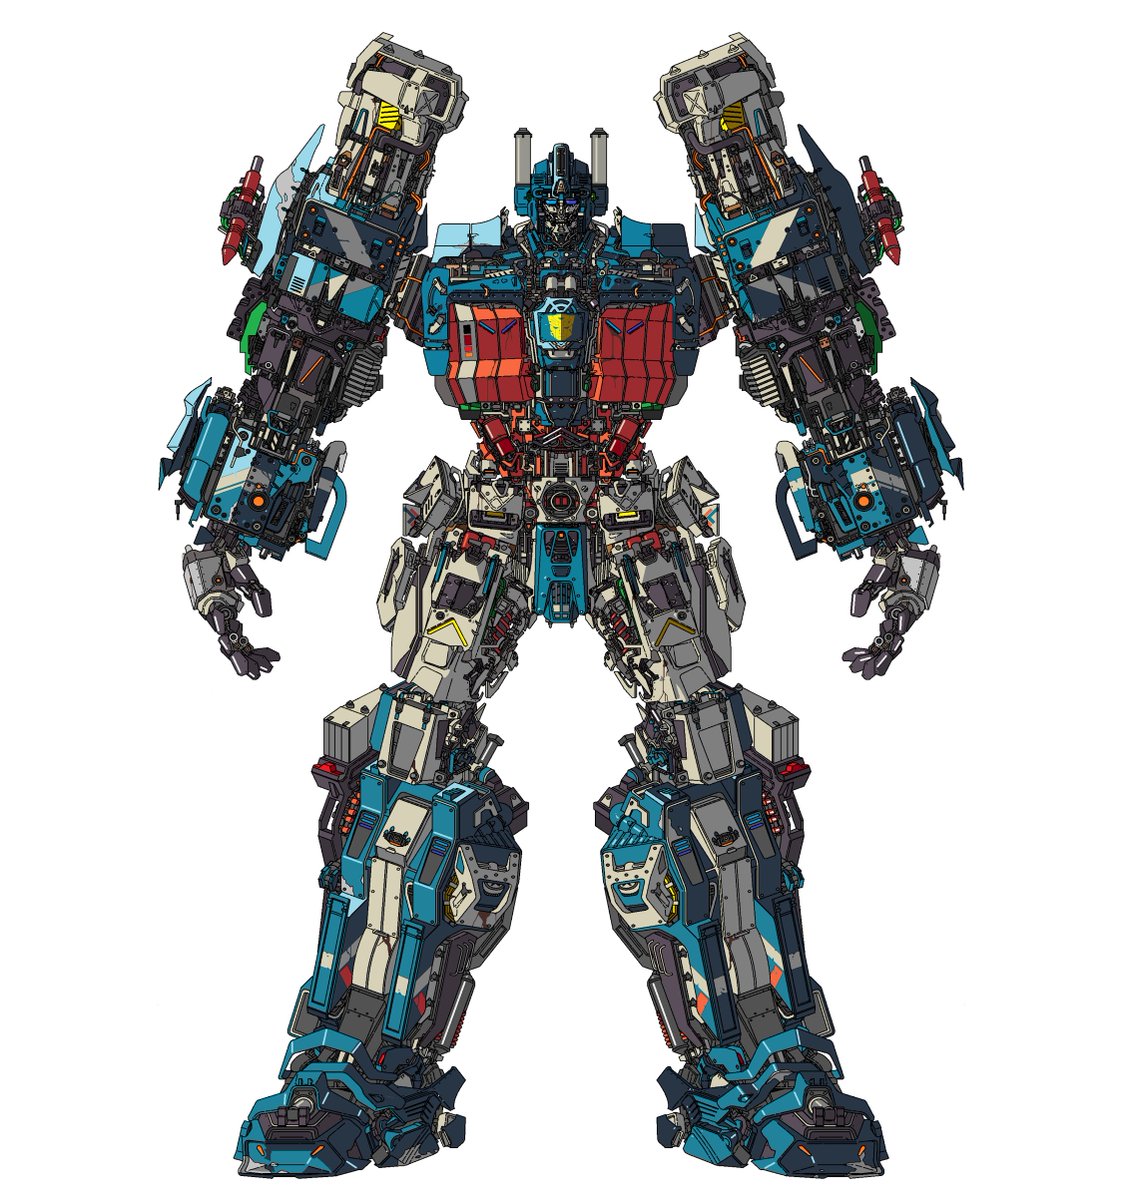 My guy looks way better with SHADES
#Transformers #TransformersRiseofTheBeast #Ultramagnus